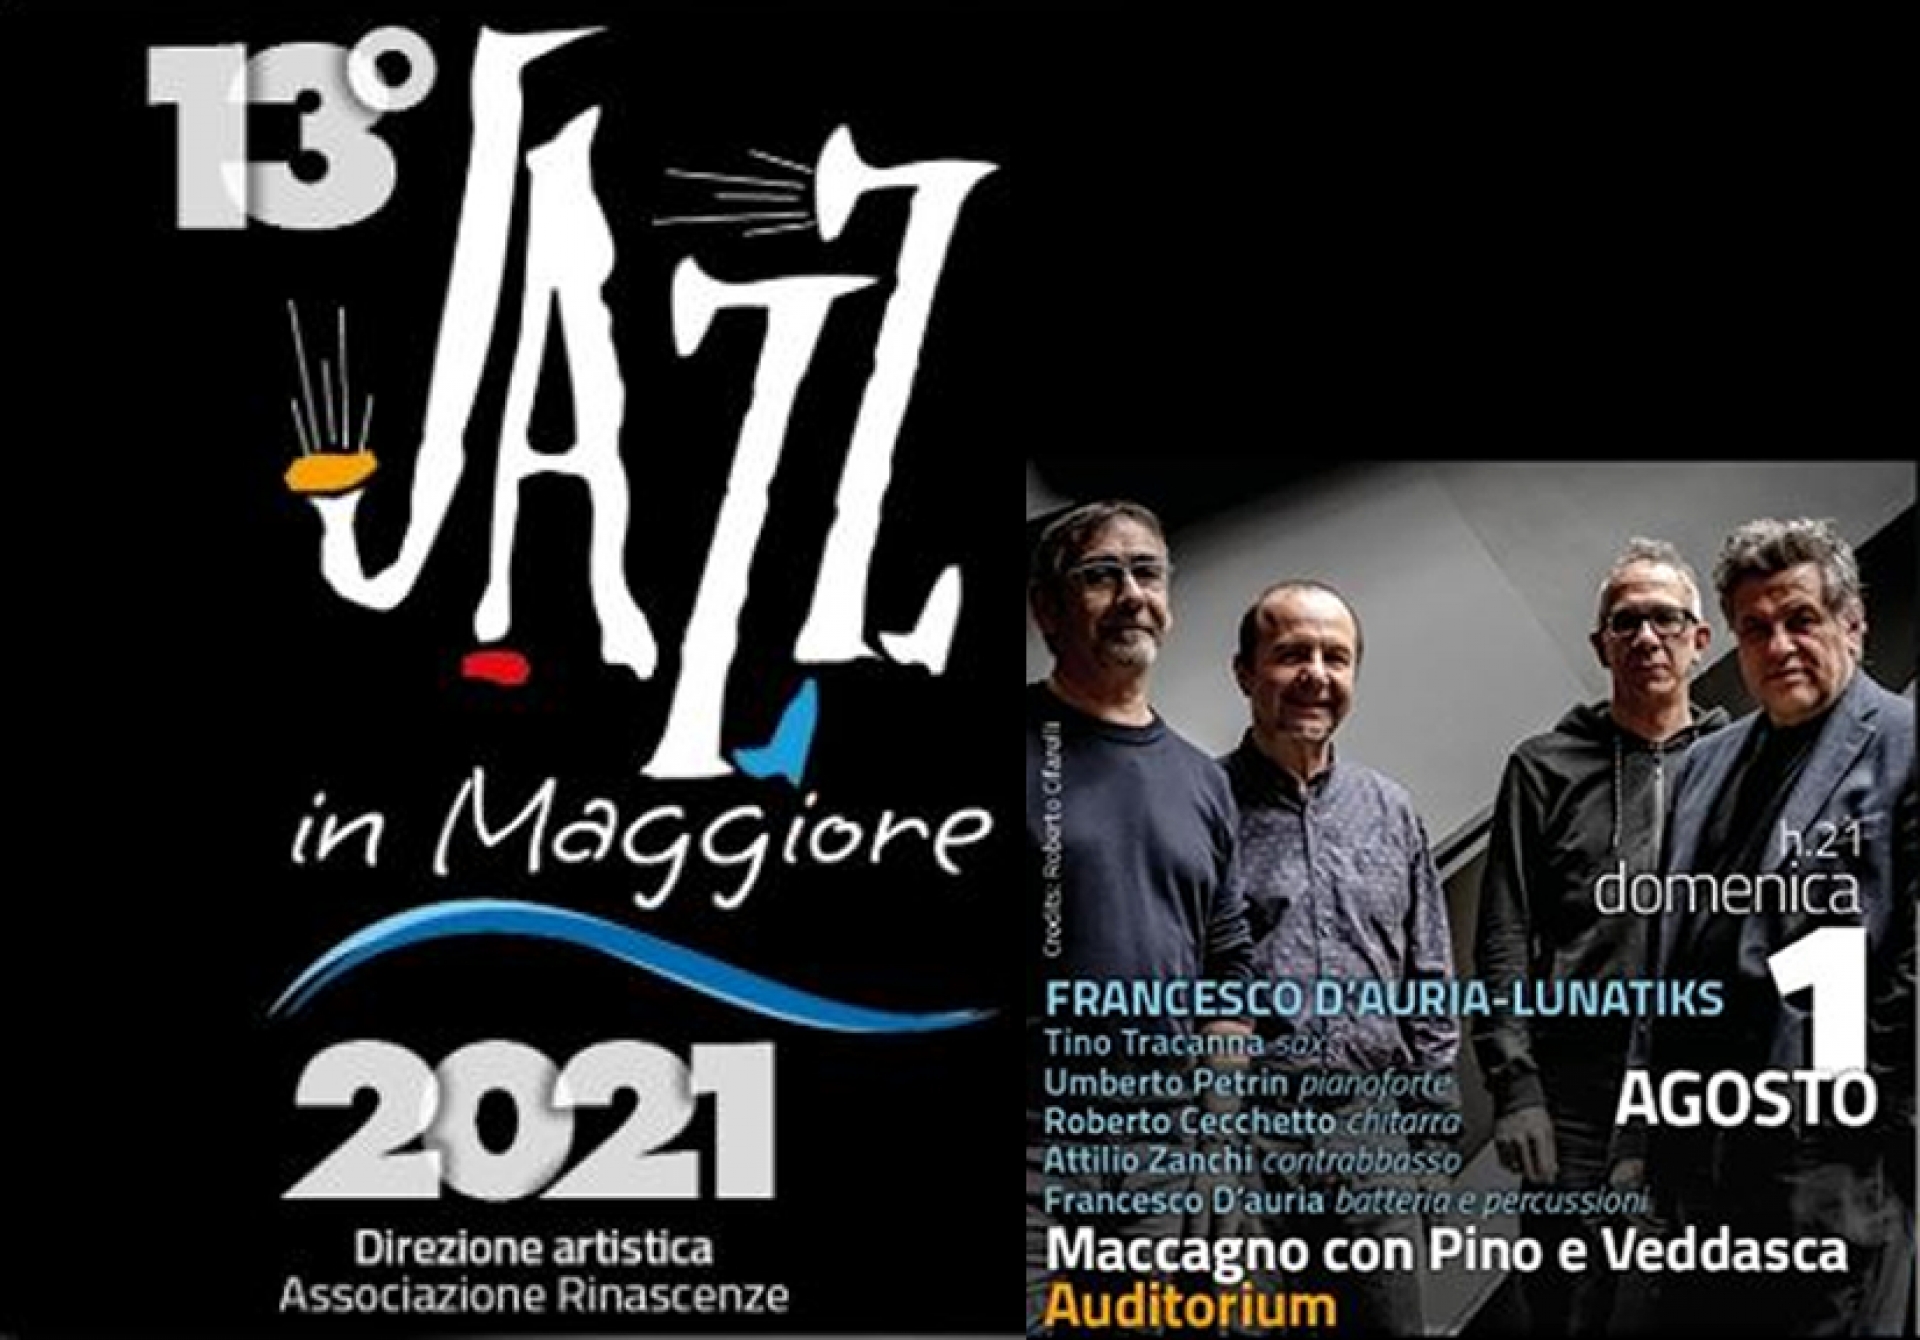 Jazz in Maggiore - Francesco D’Auria – Lunatiks